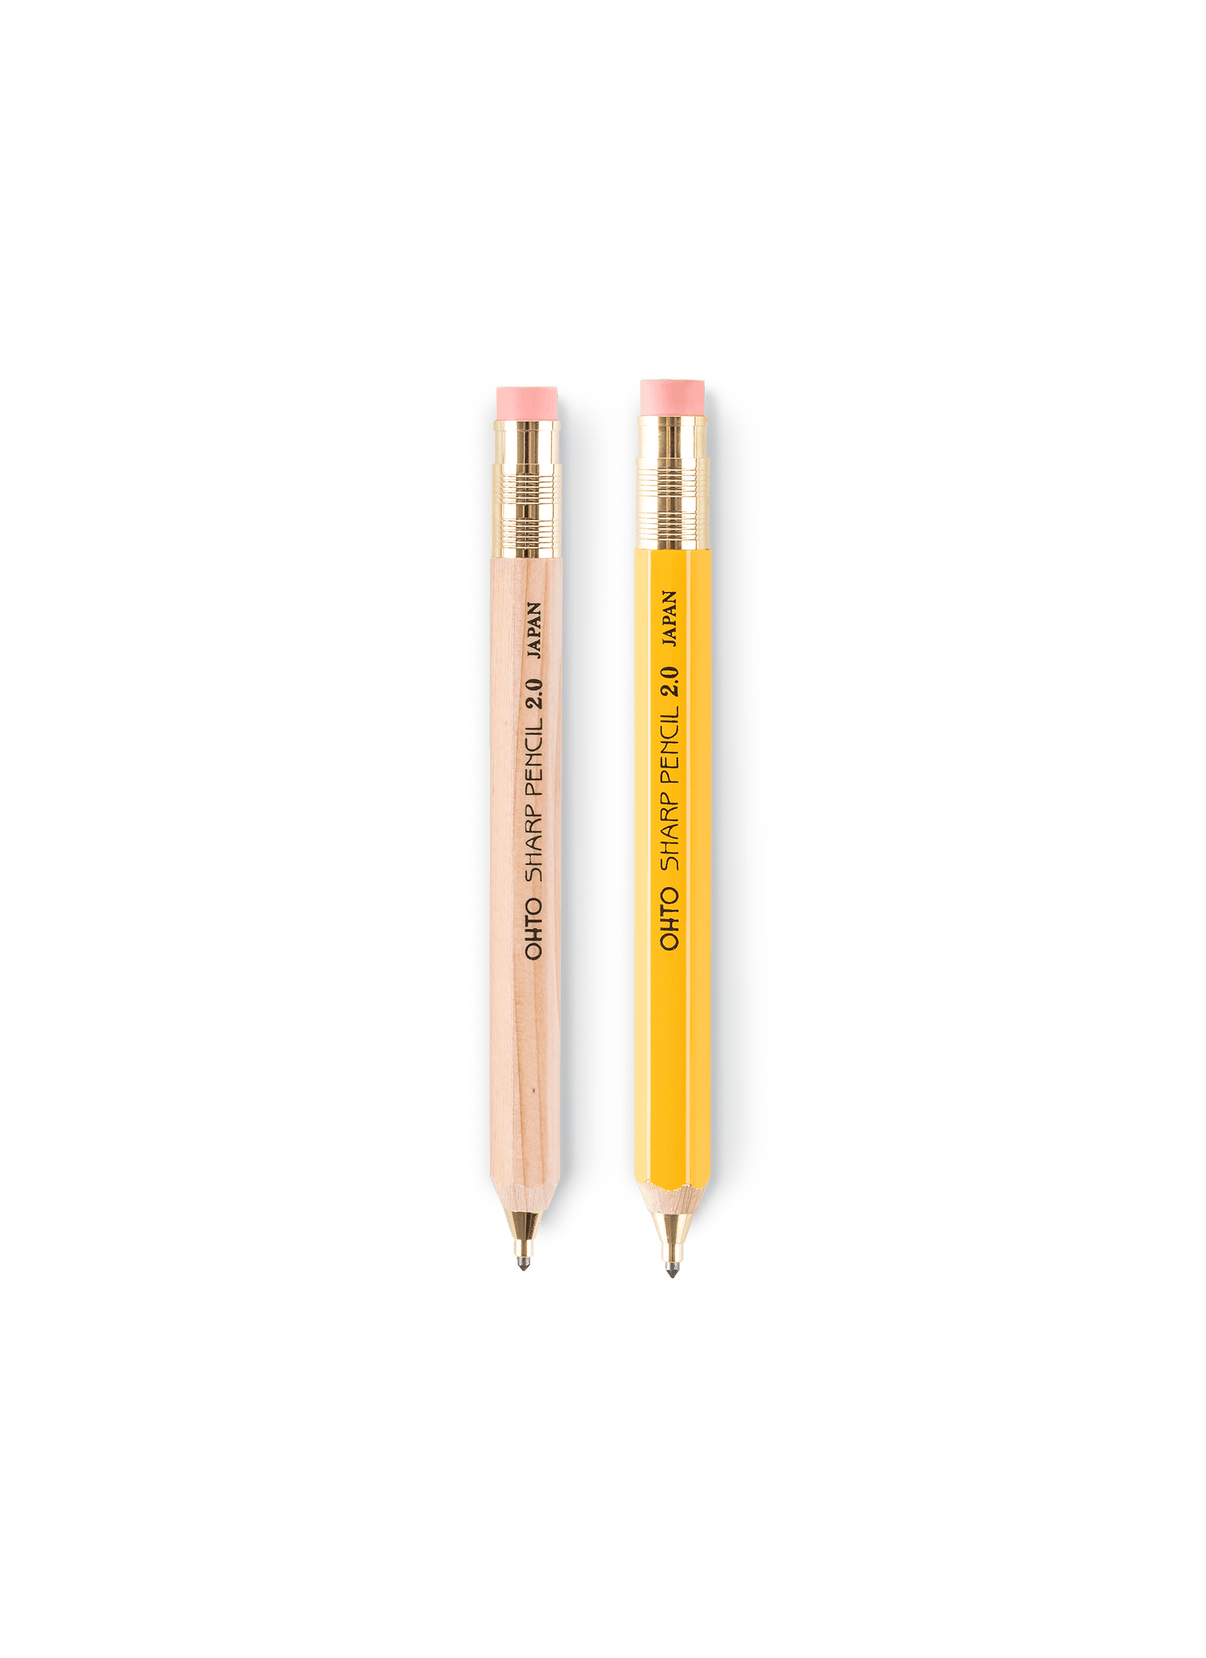 sharp pencils